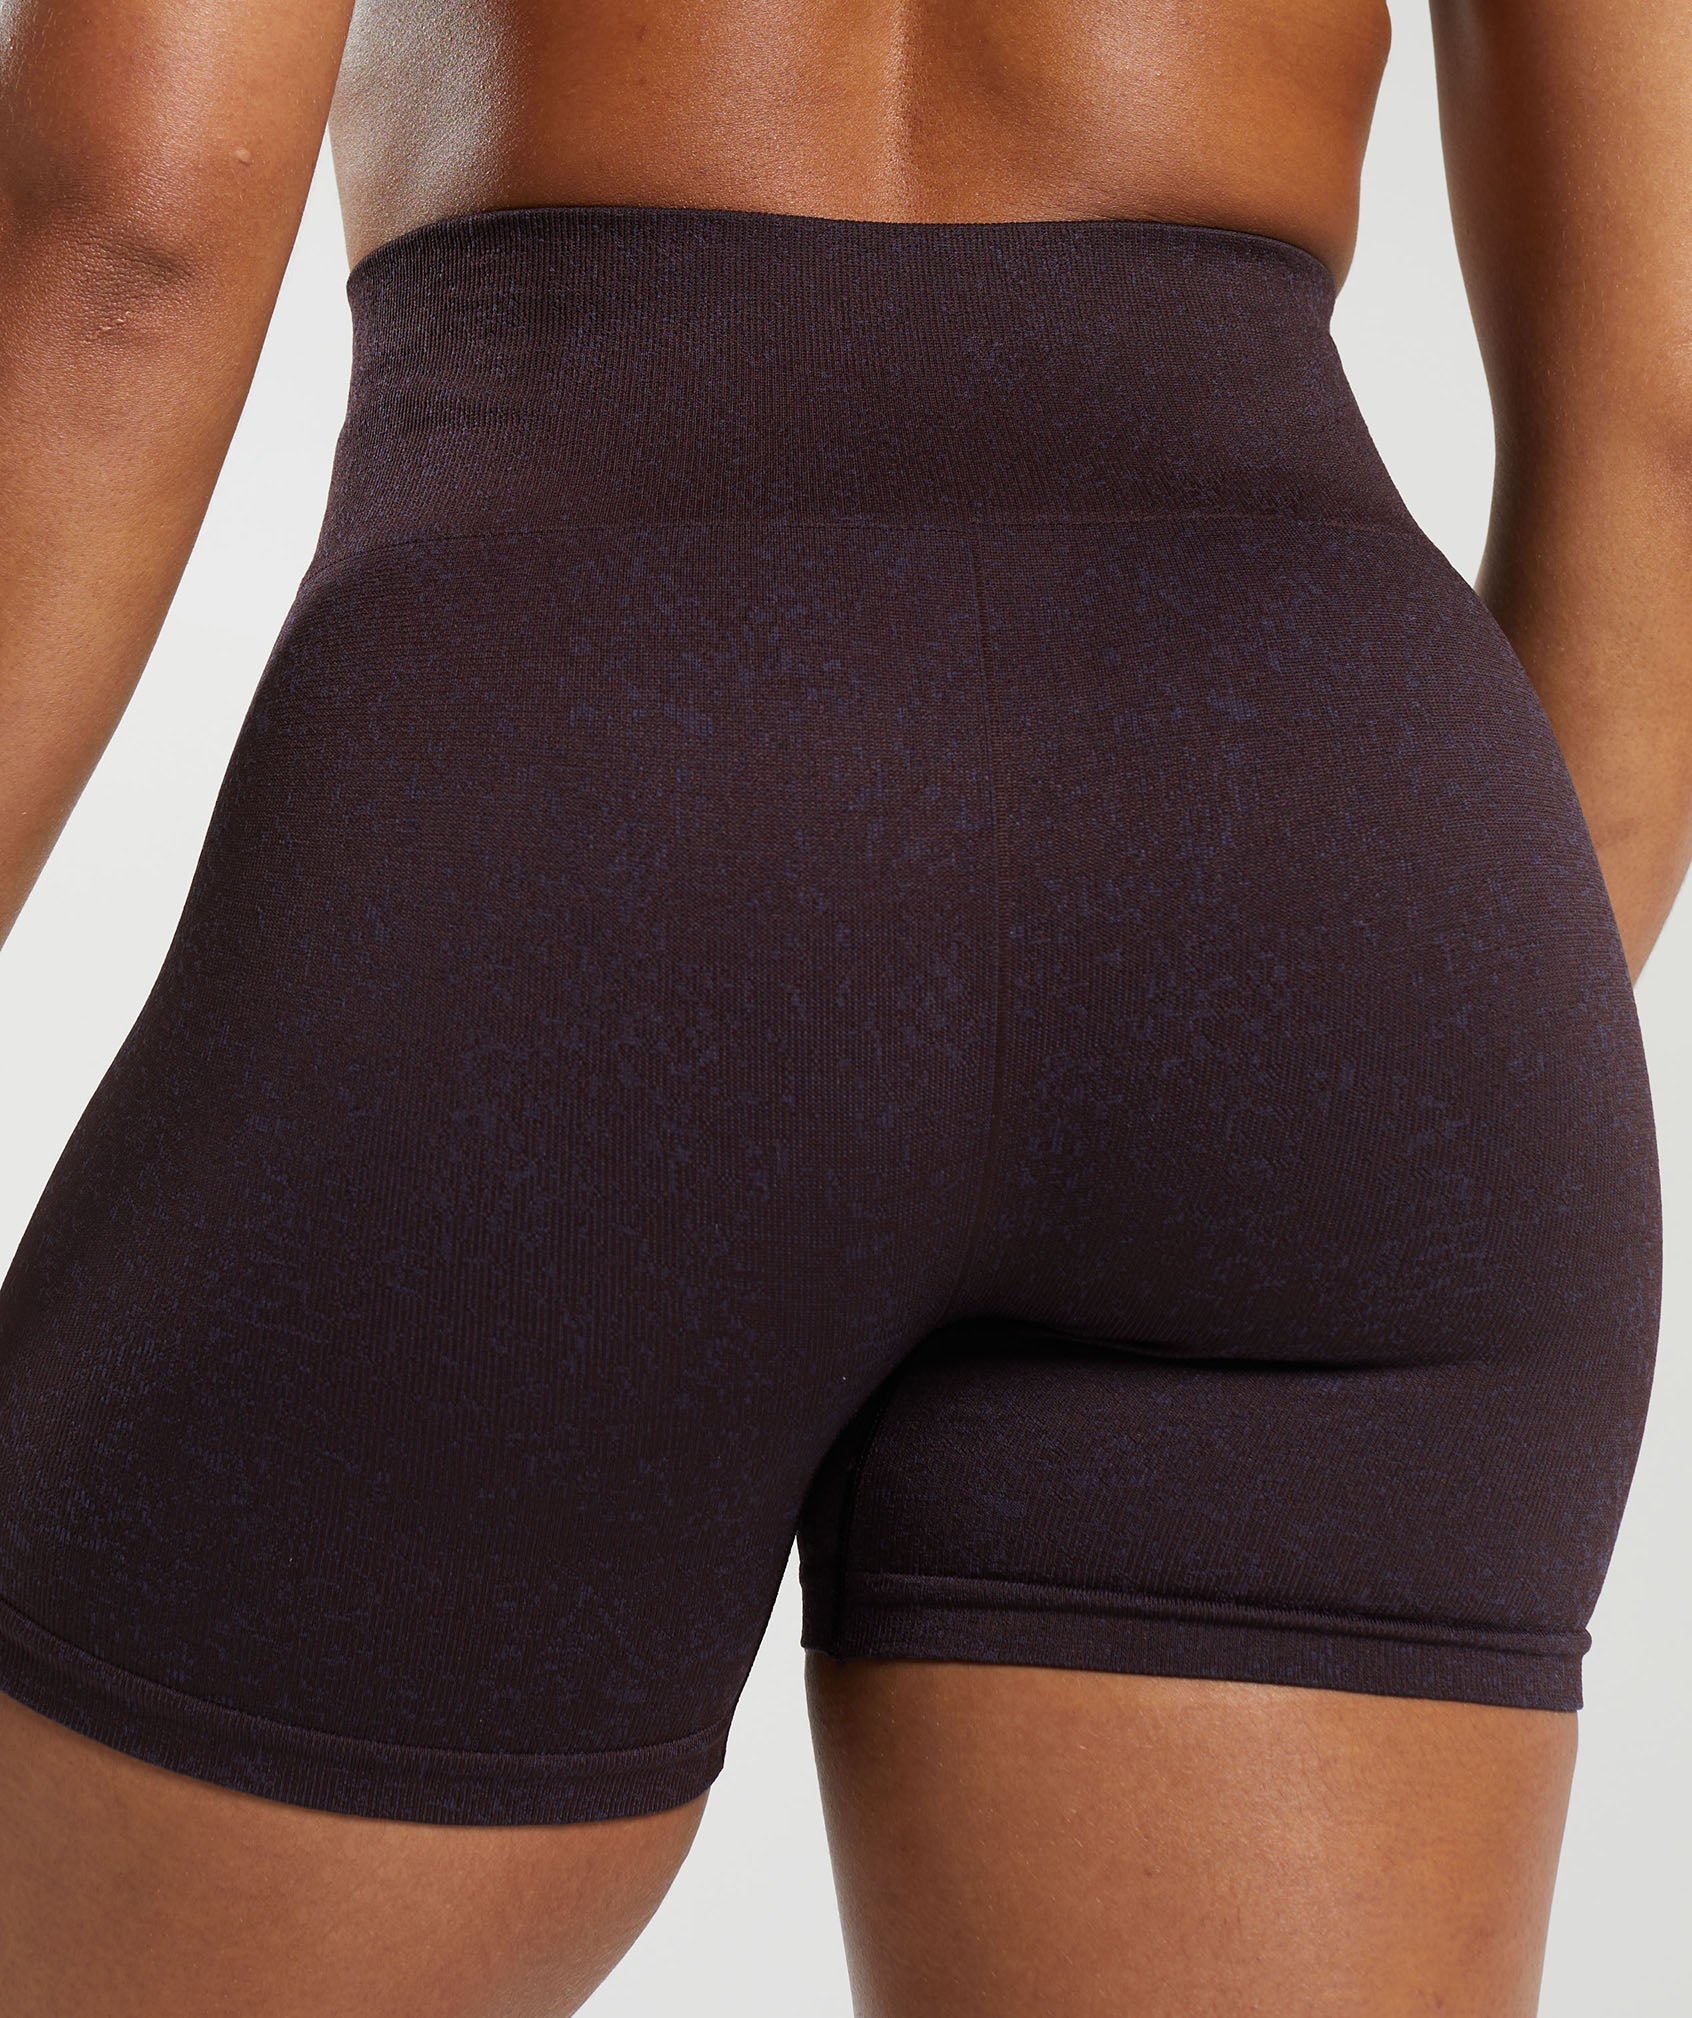 Adapt Fleck Seamless Shorts in Plum Brown/Dewberry Purple - view 6